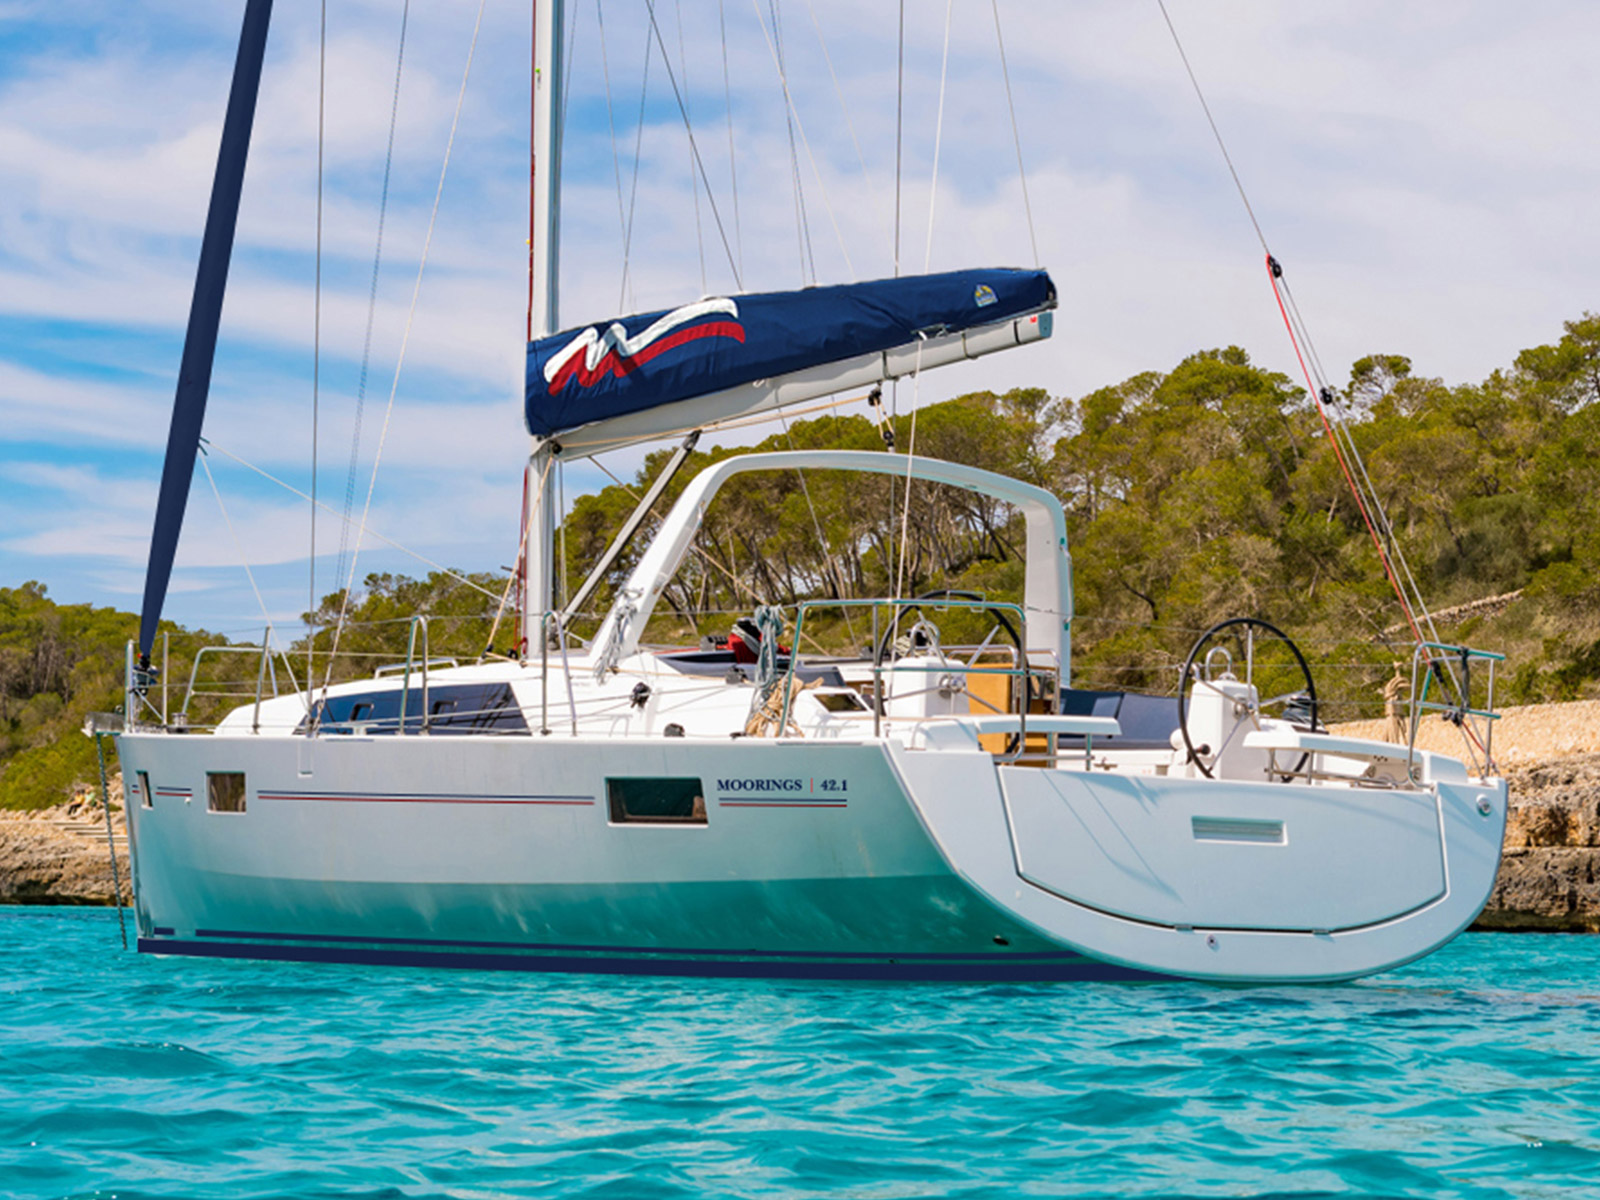 Yacht charter Moorings 42.1 - Bahamas, New Providence, Nassau